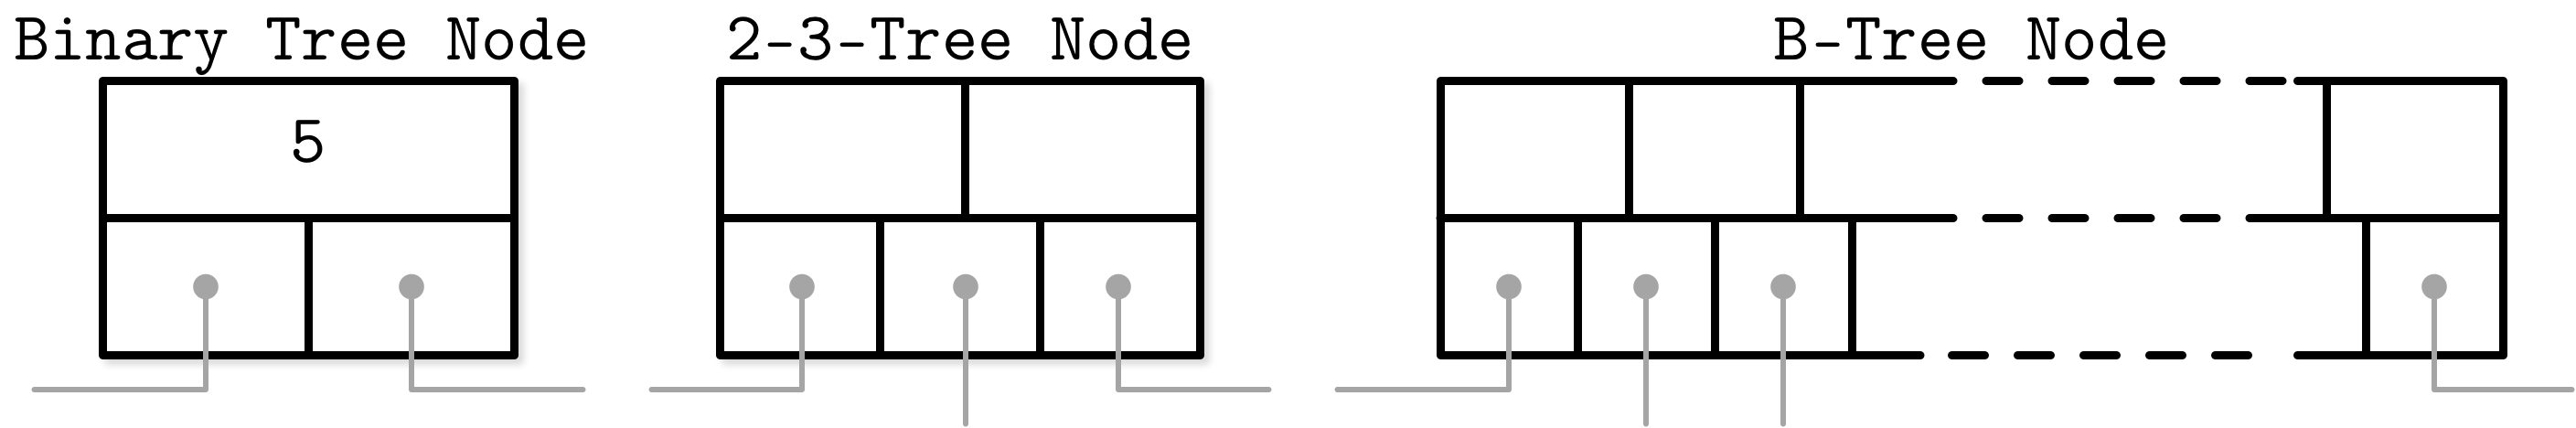 Tree node types